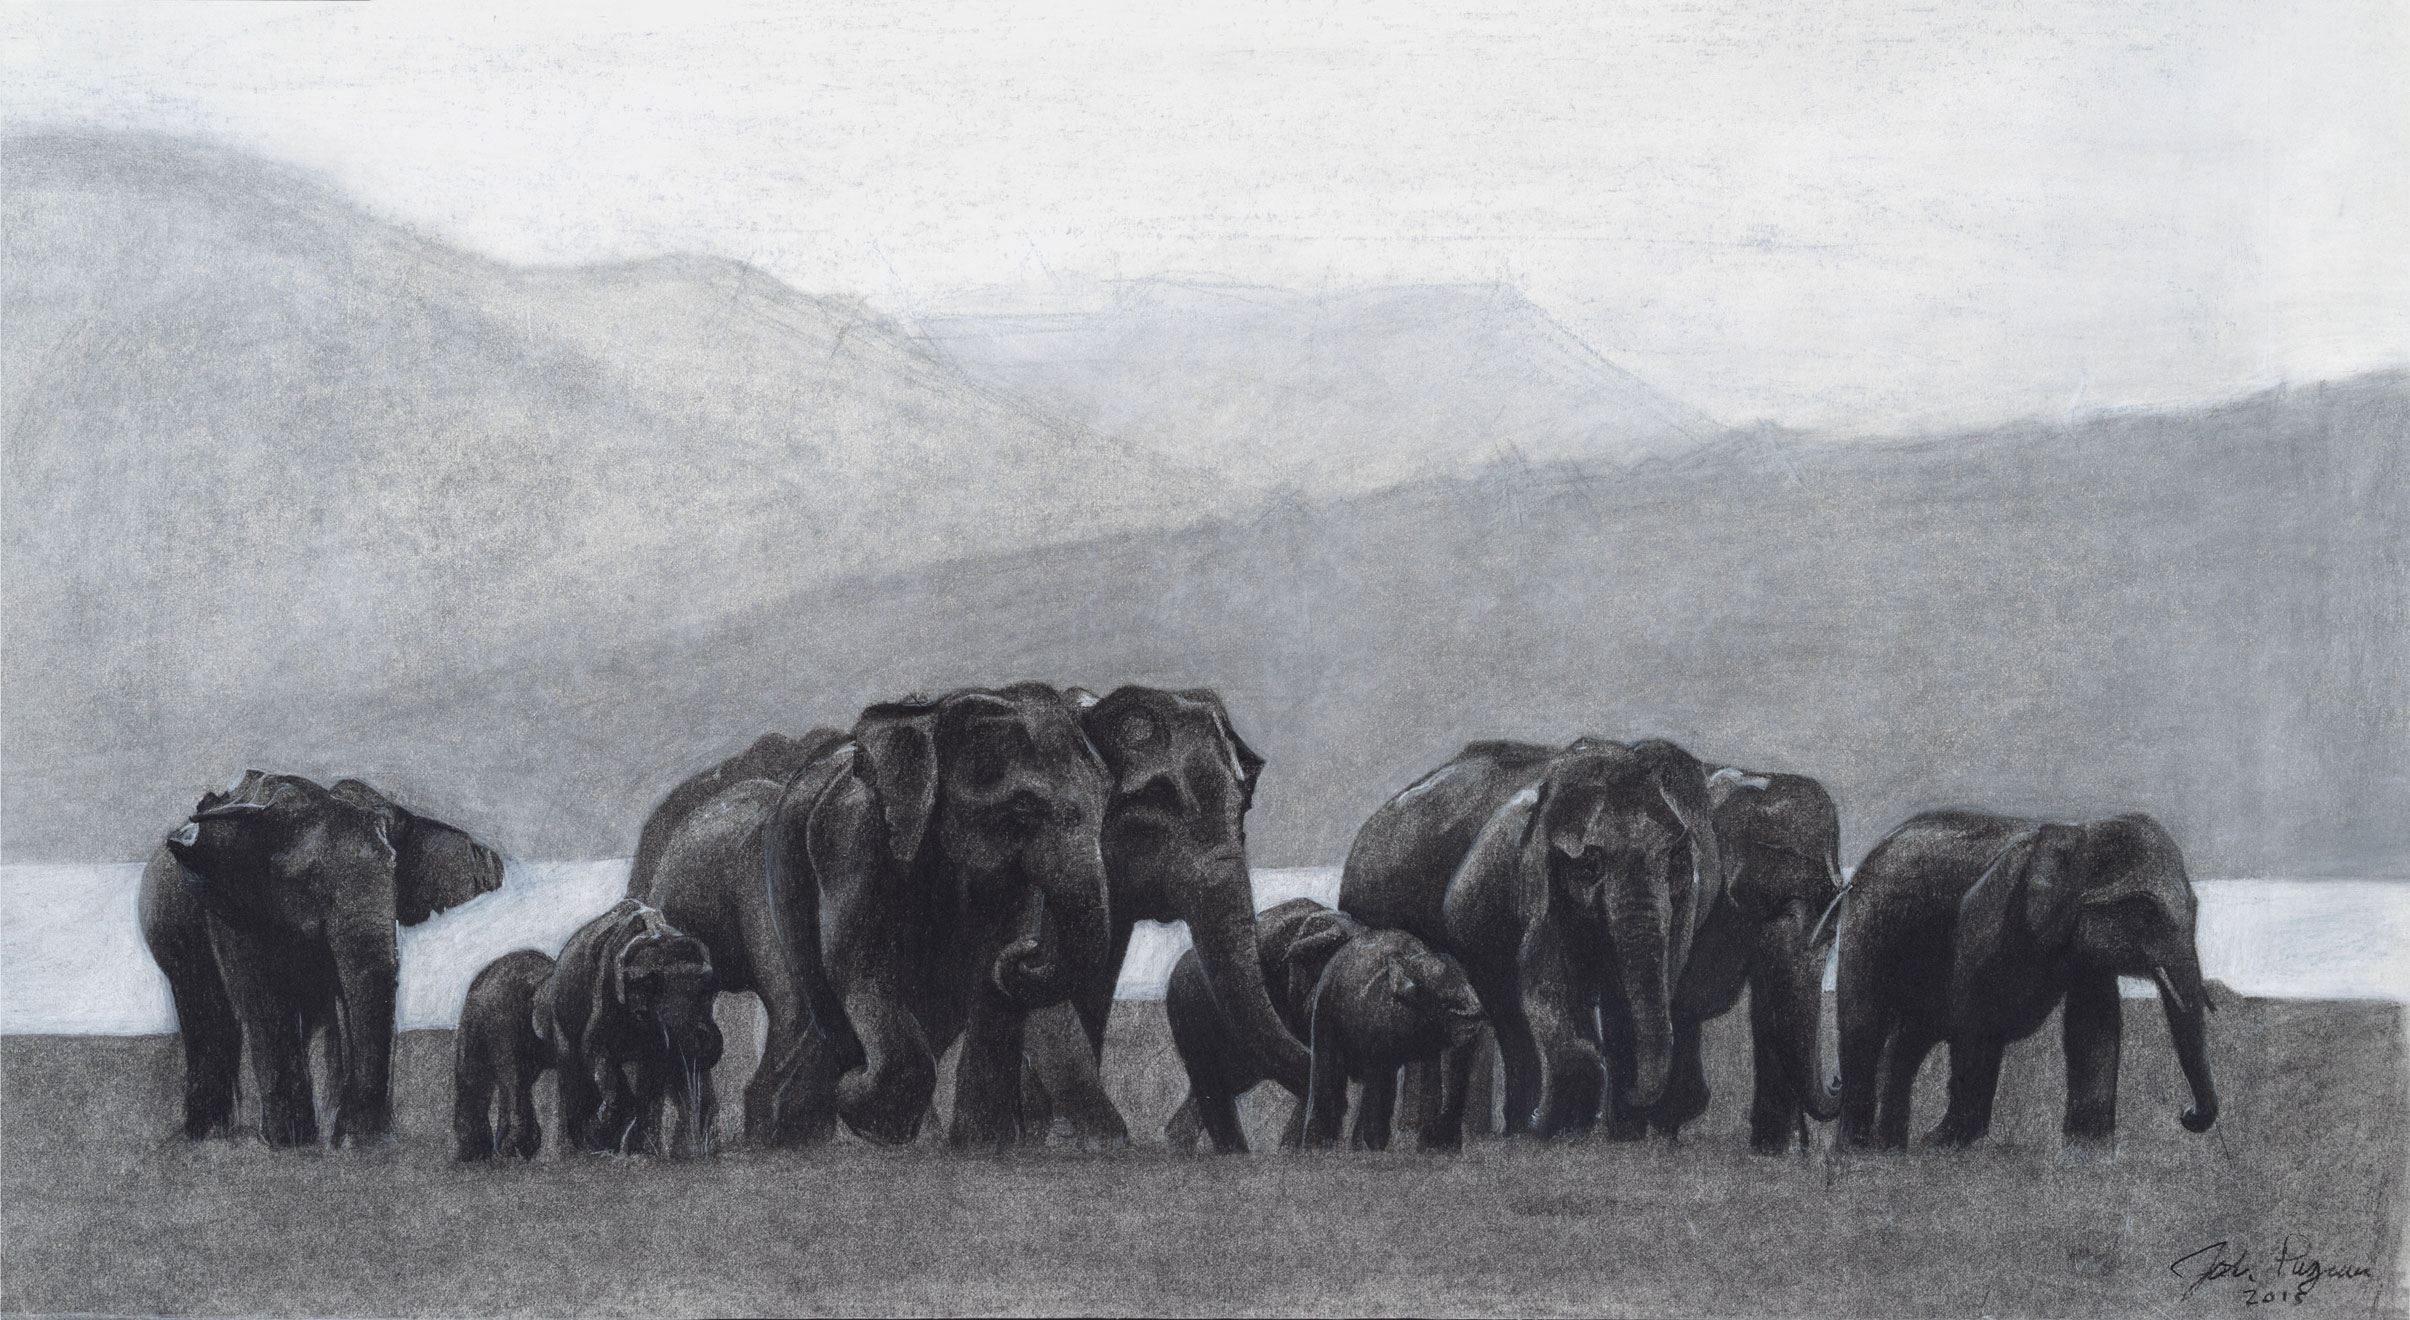 Parade of Elephants (Charcoal)